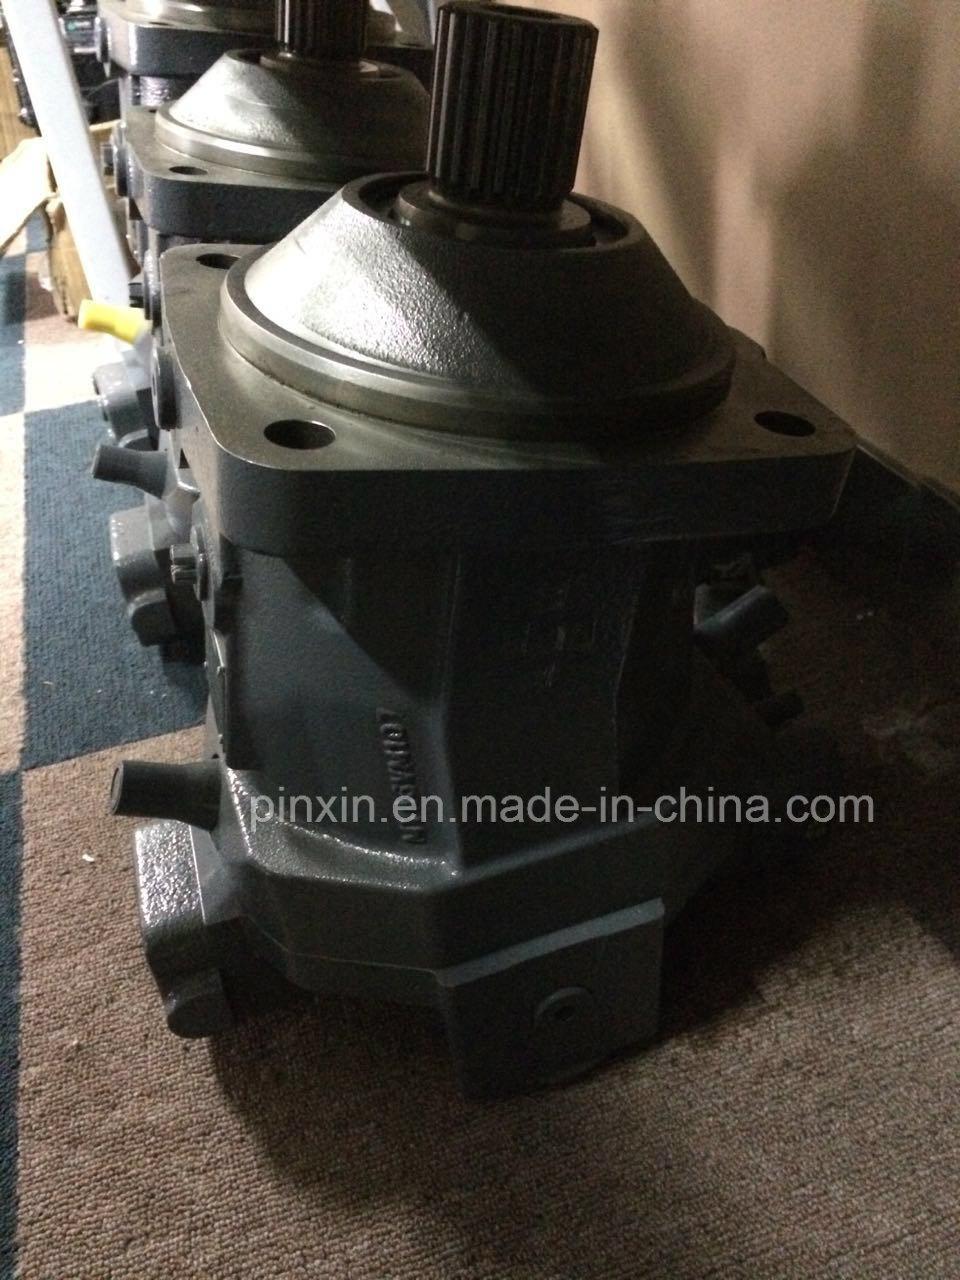 Hydraulic Piston Motor A6vm107da1/63W-Vzb017 for Excavator From China Supplier